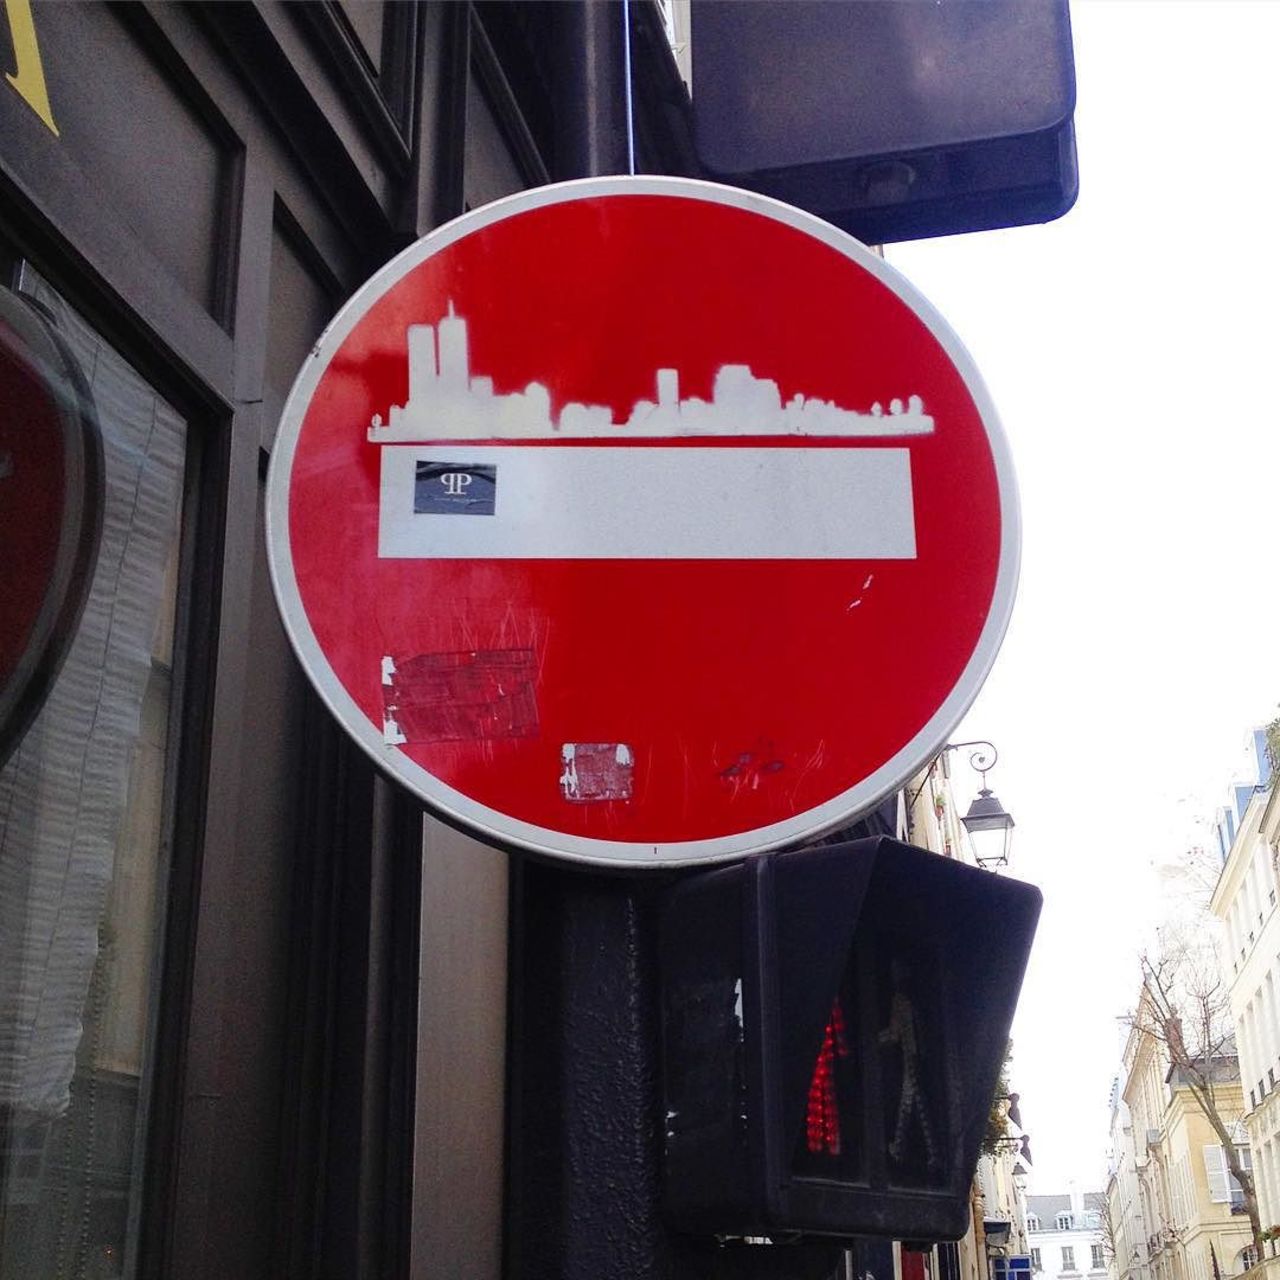 #Paris #graffiti photo by @benapix http://ift.tt/1RxWnKG #StreetArt https://t.co/XBIXSQP4uX